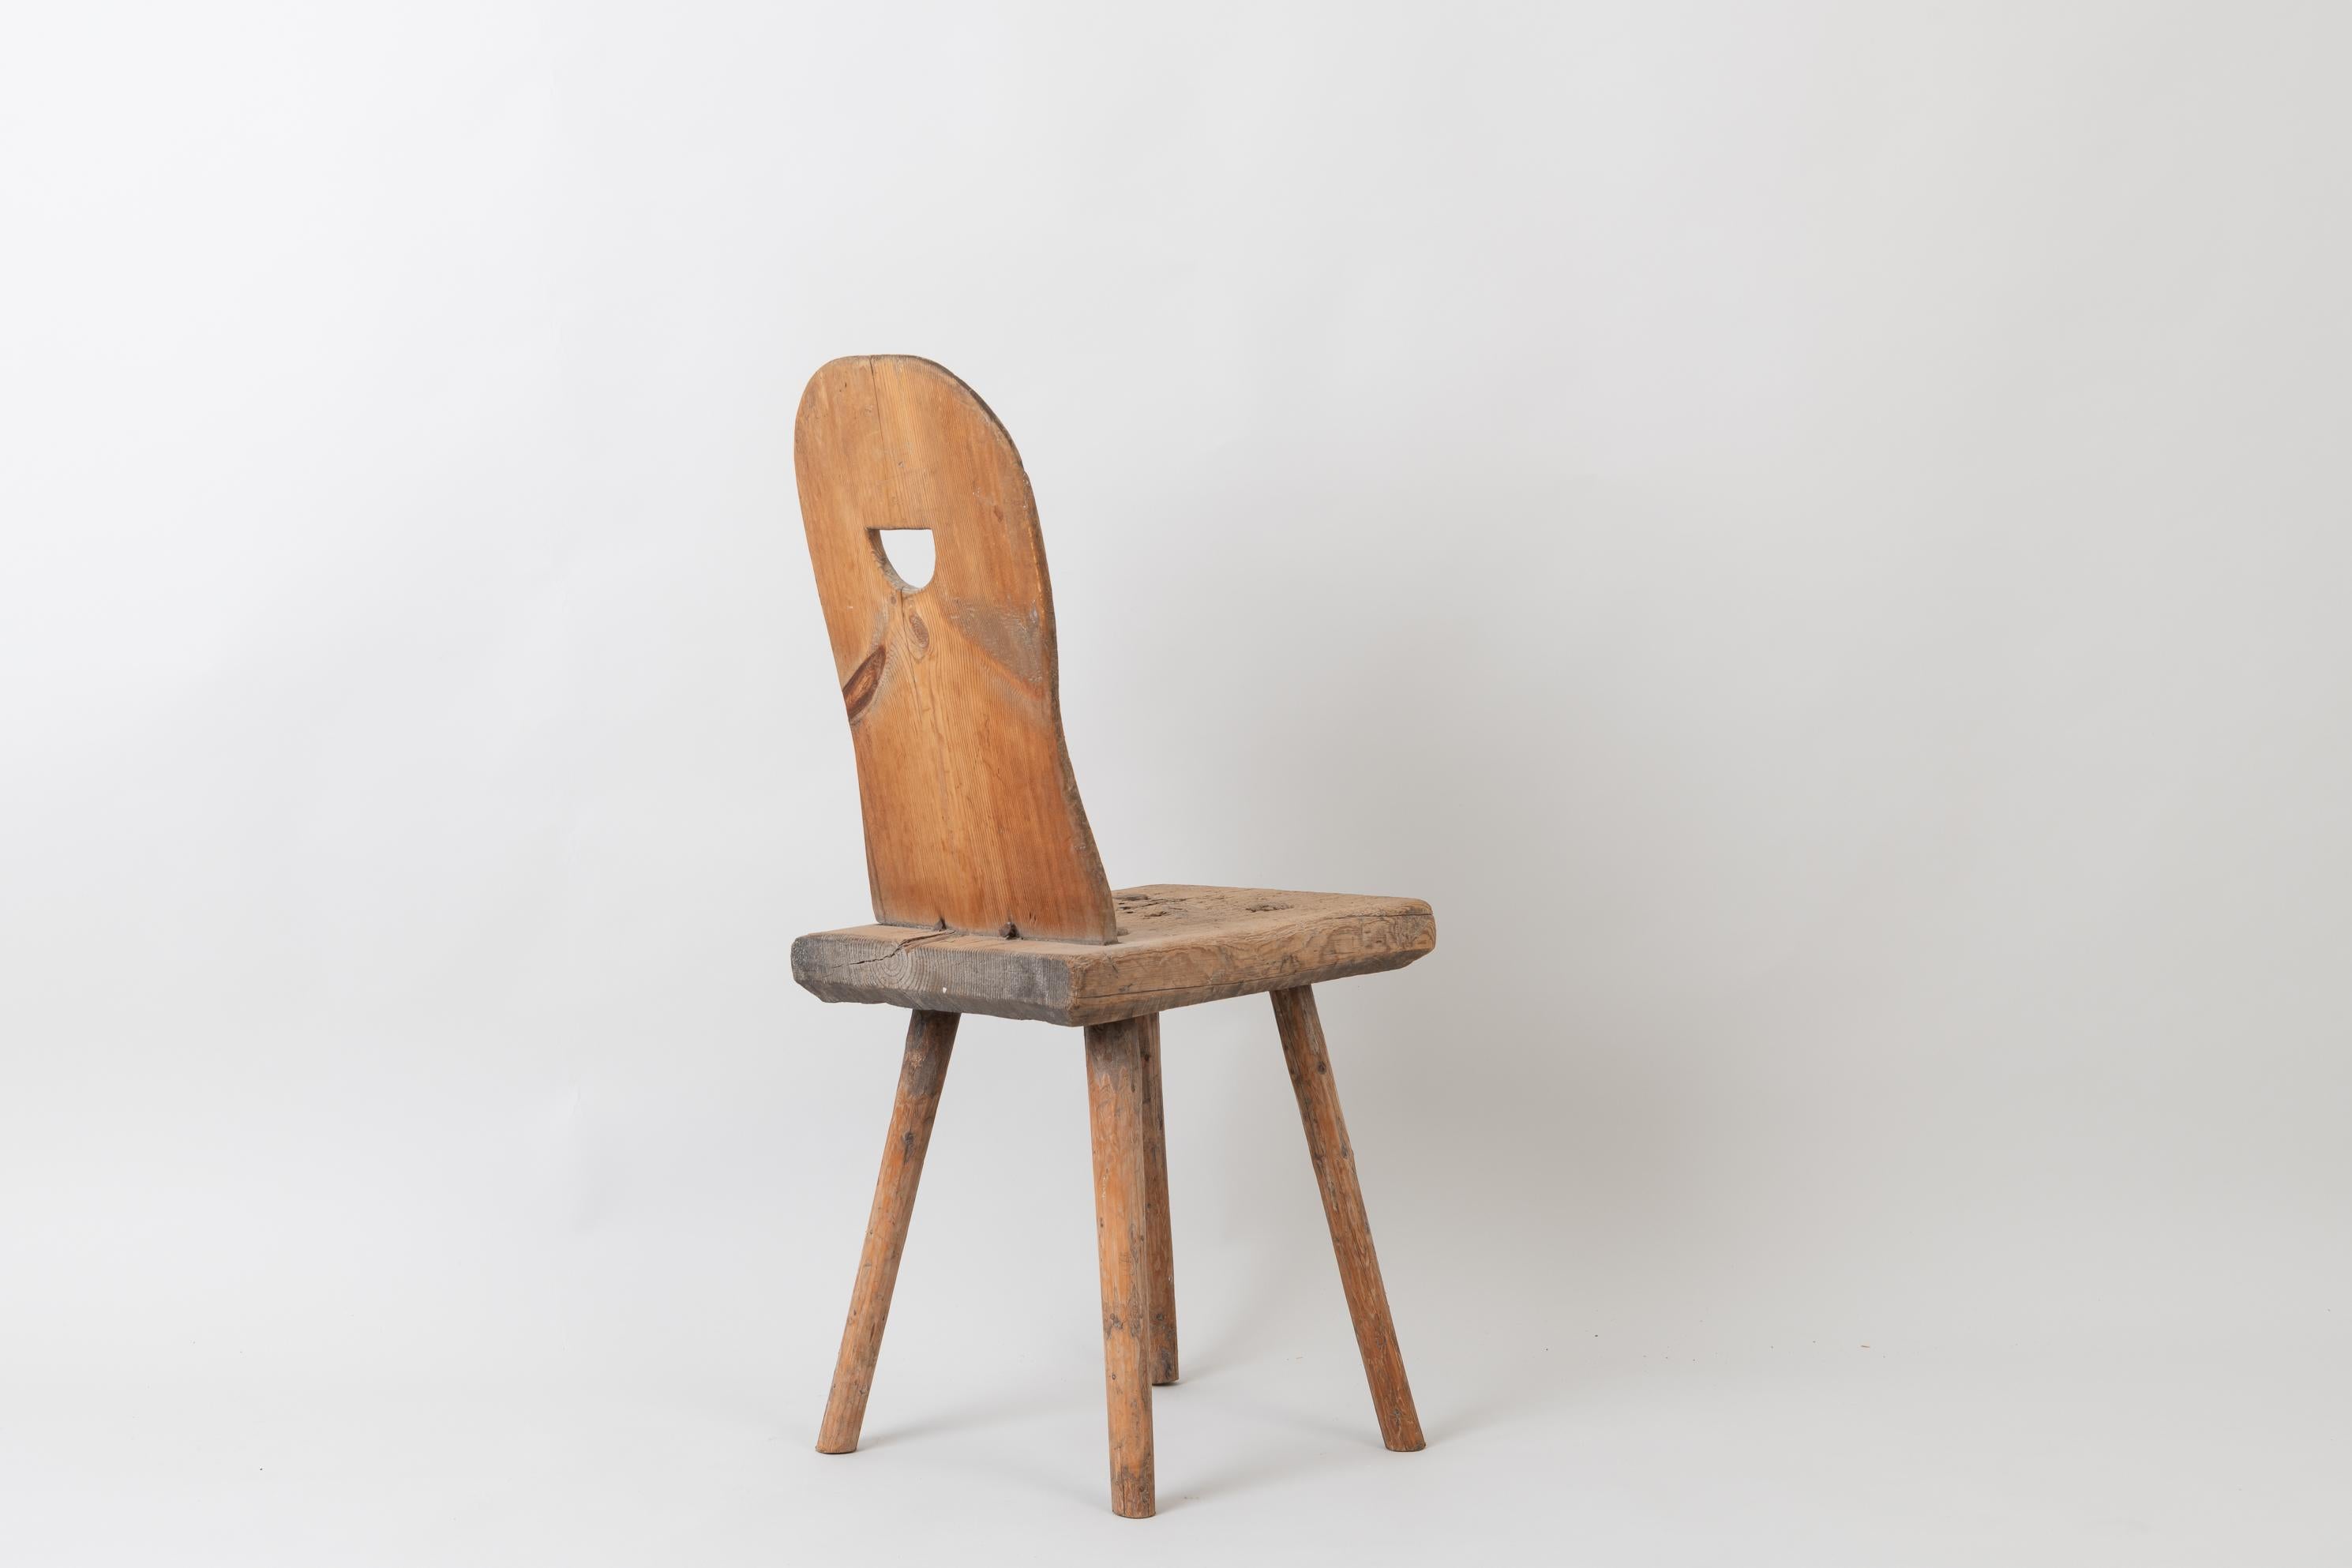 Pine 19th Century Swedish Folk Art Rustic Chair